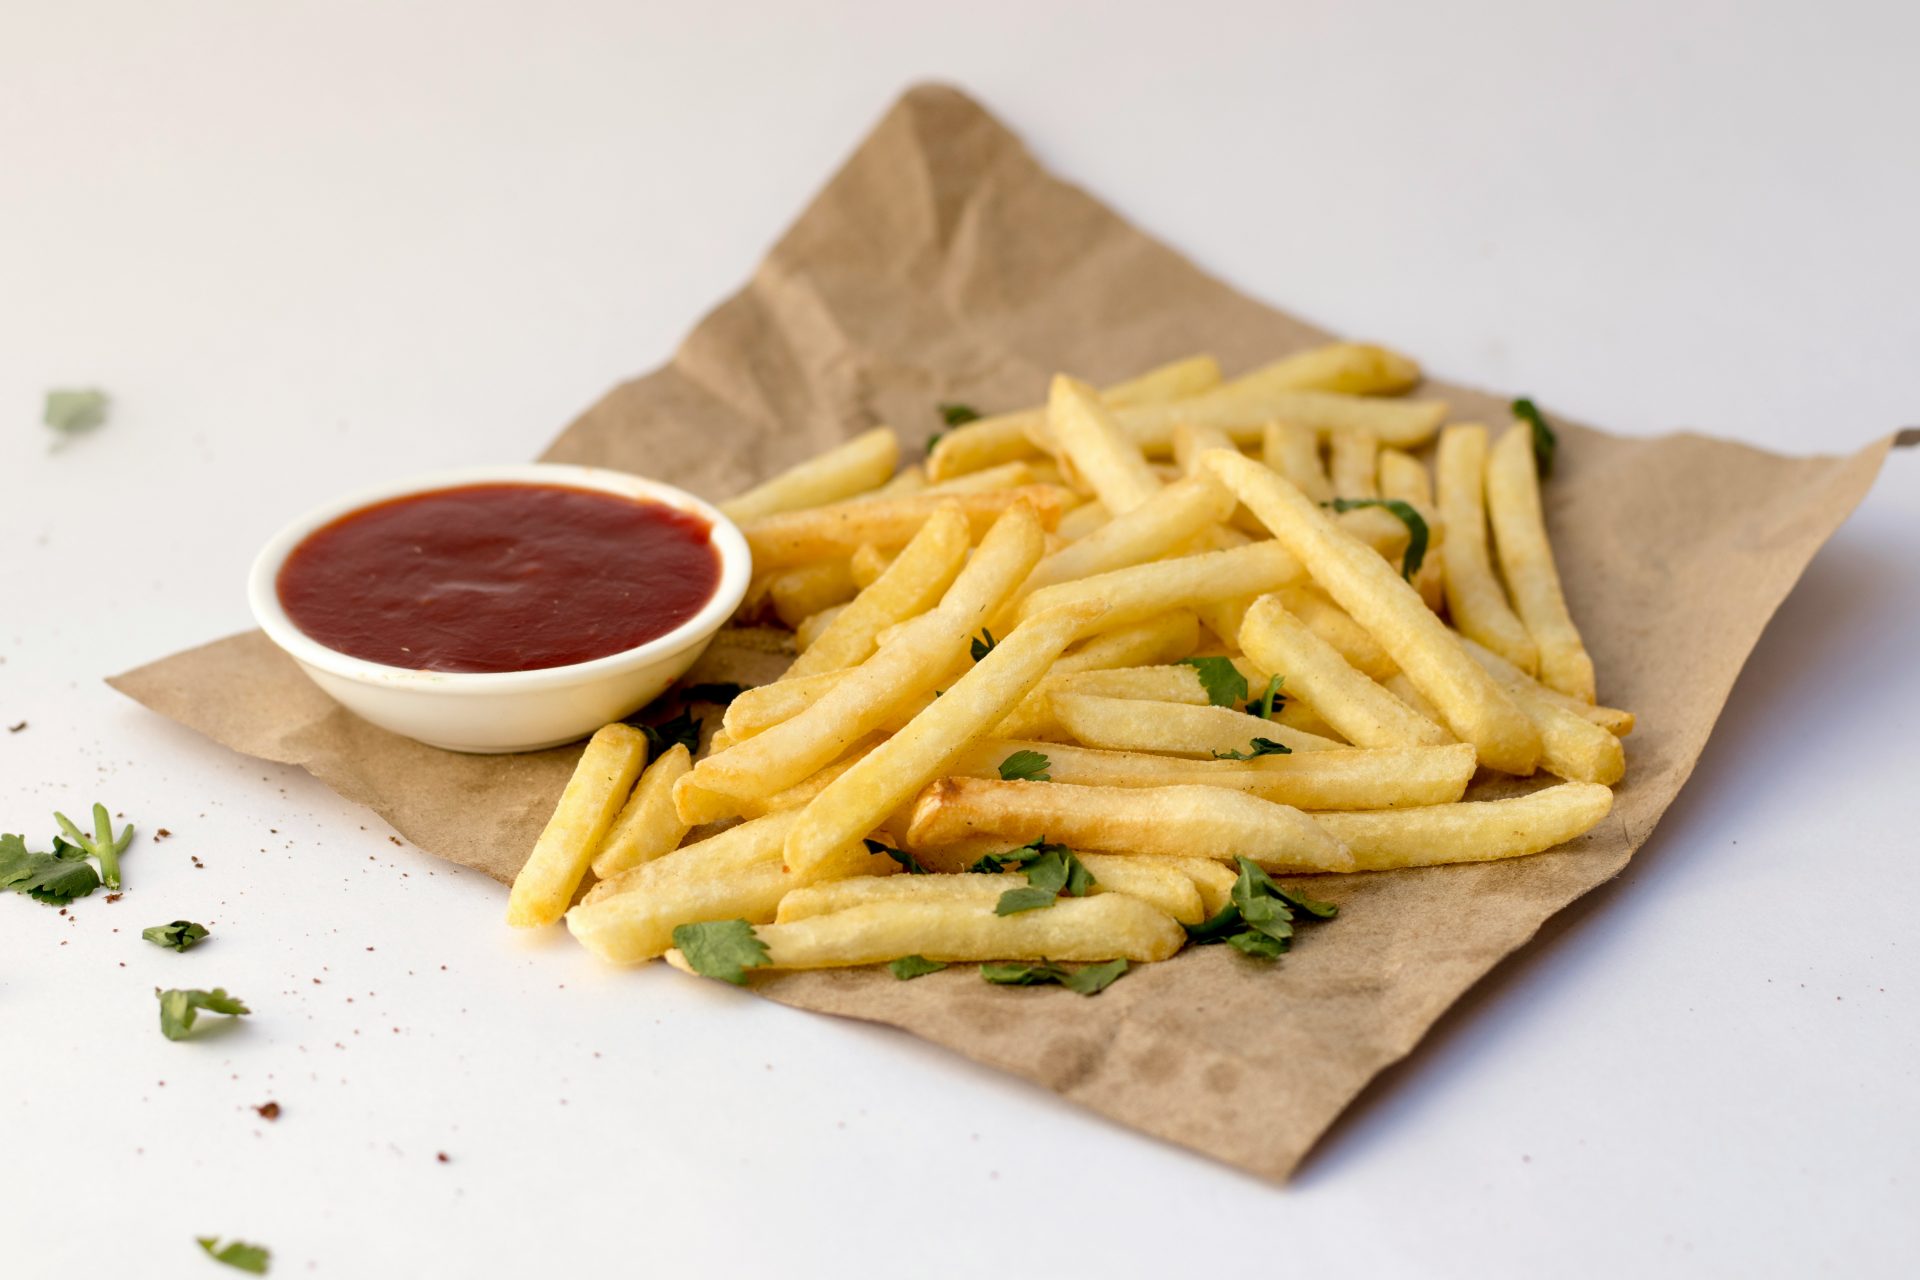 1. Fries 